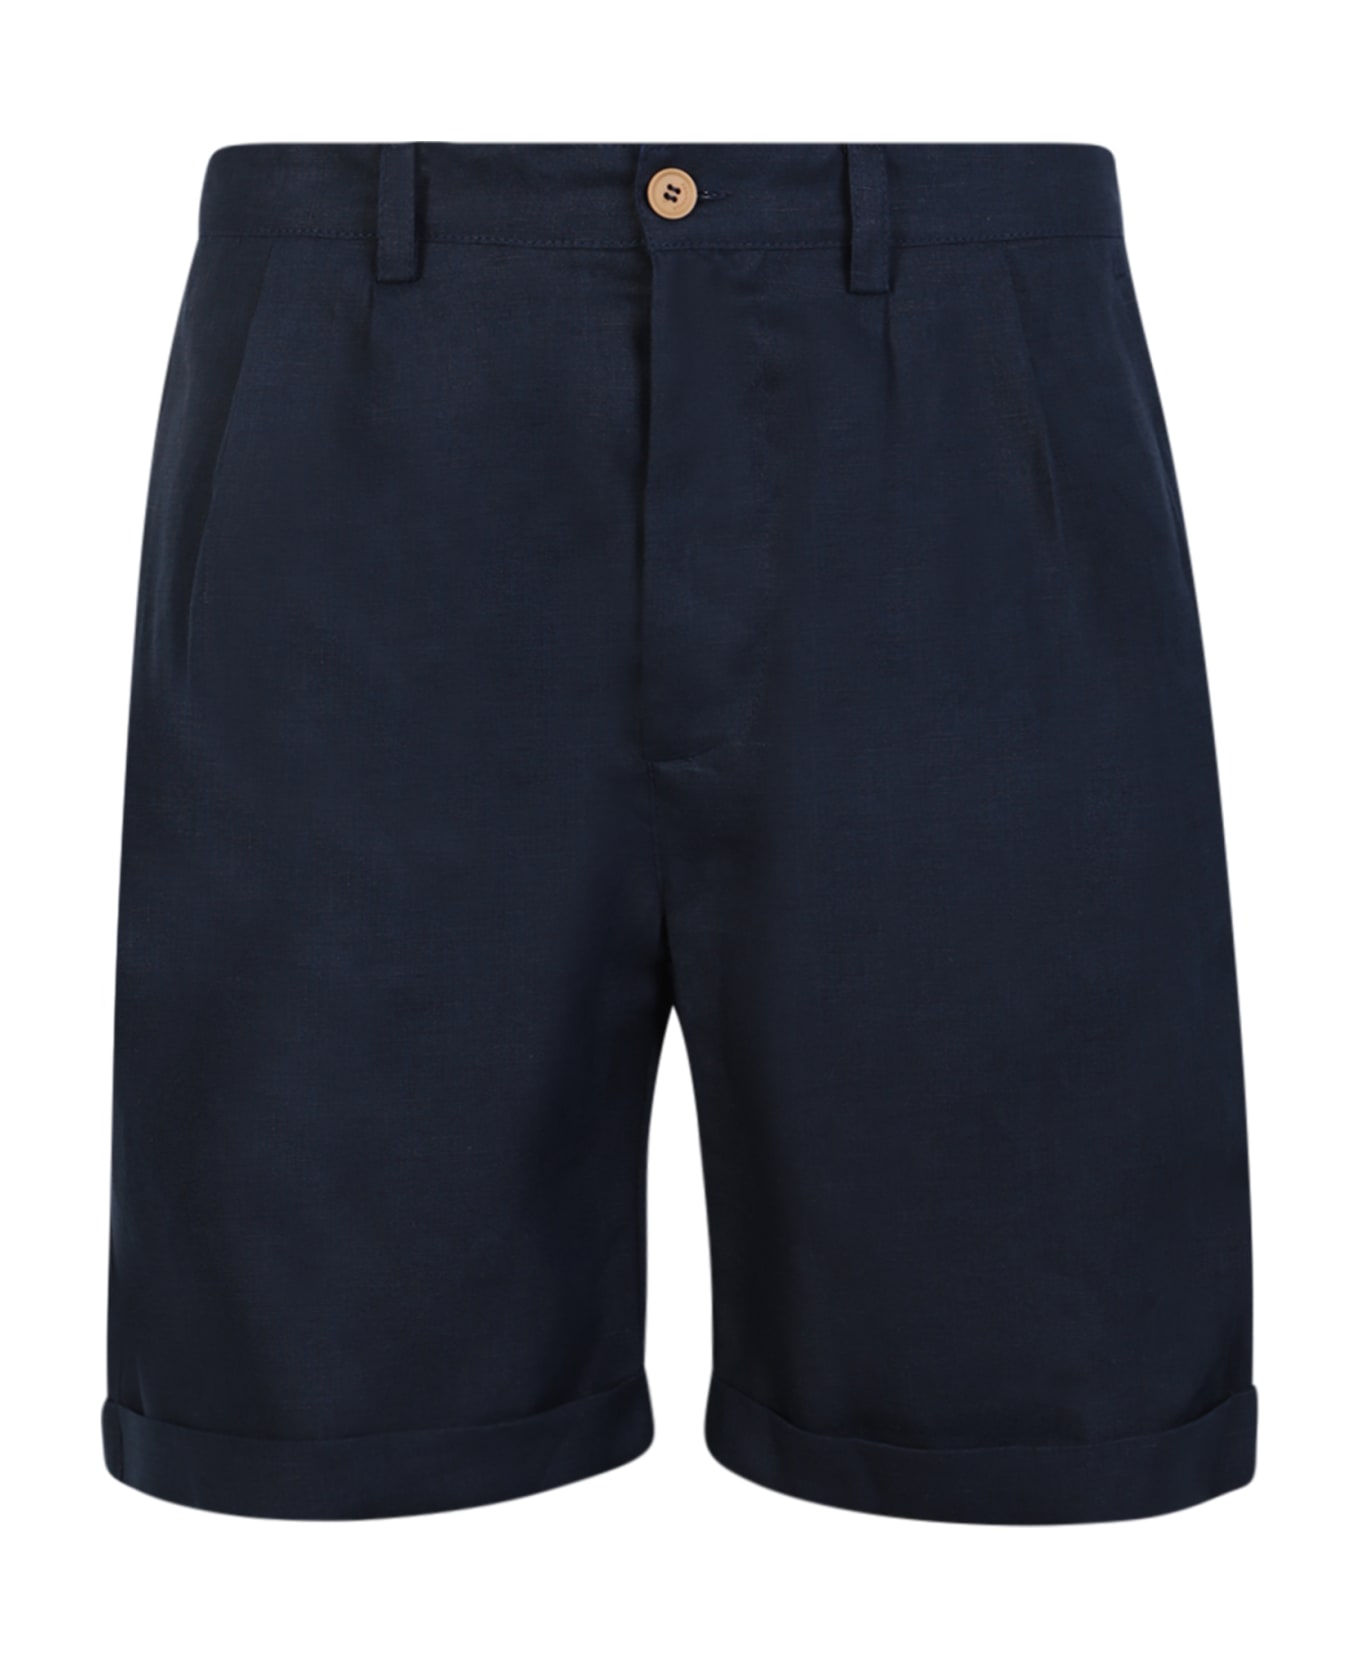 Peninsula Swimwear Stromboli Linen Black Shorts - Blue